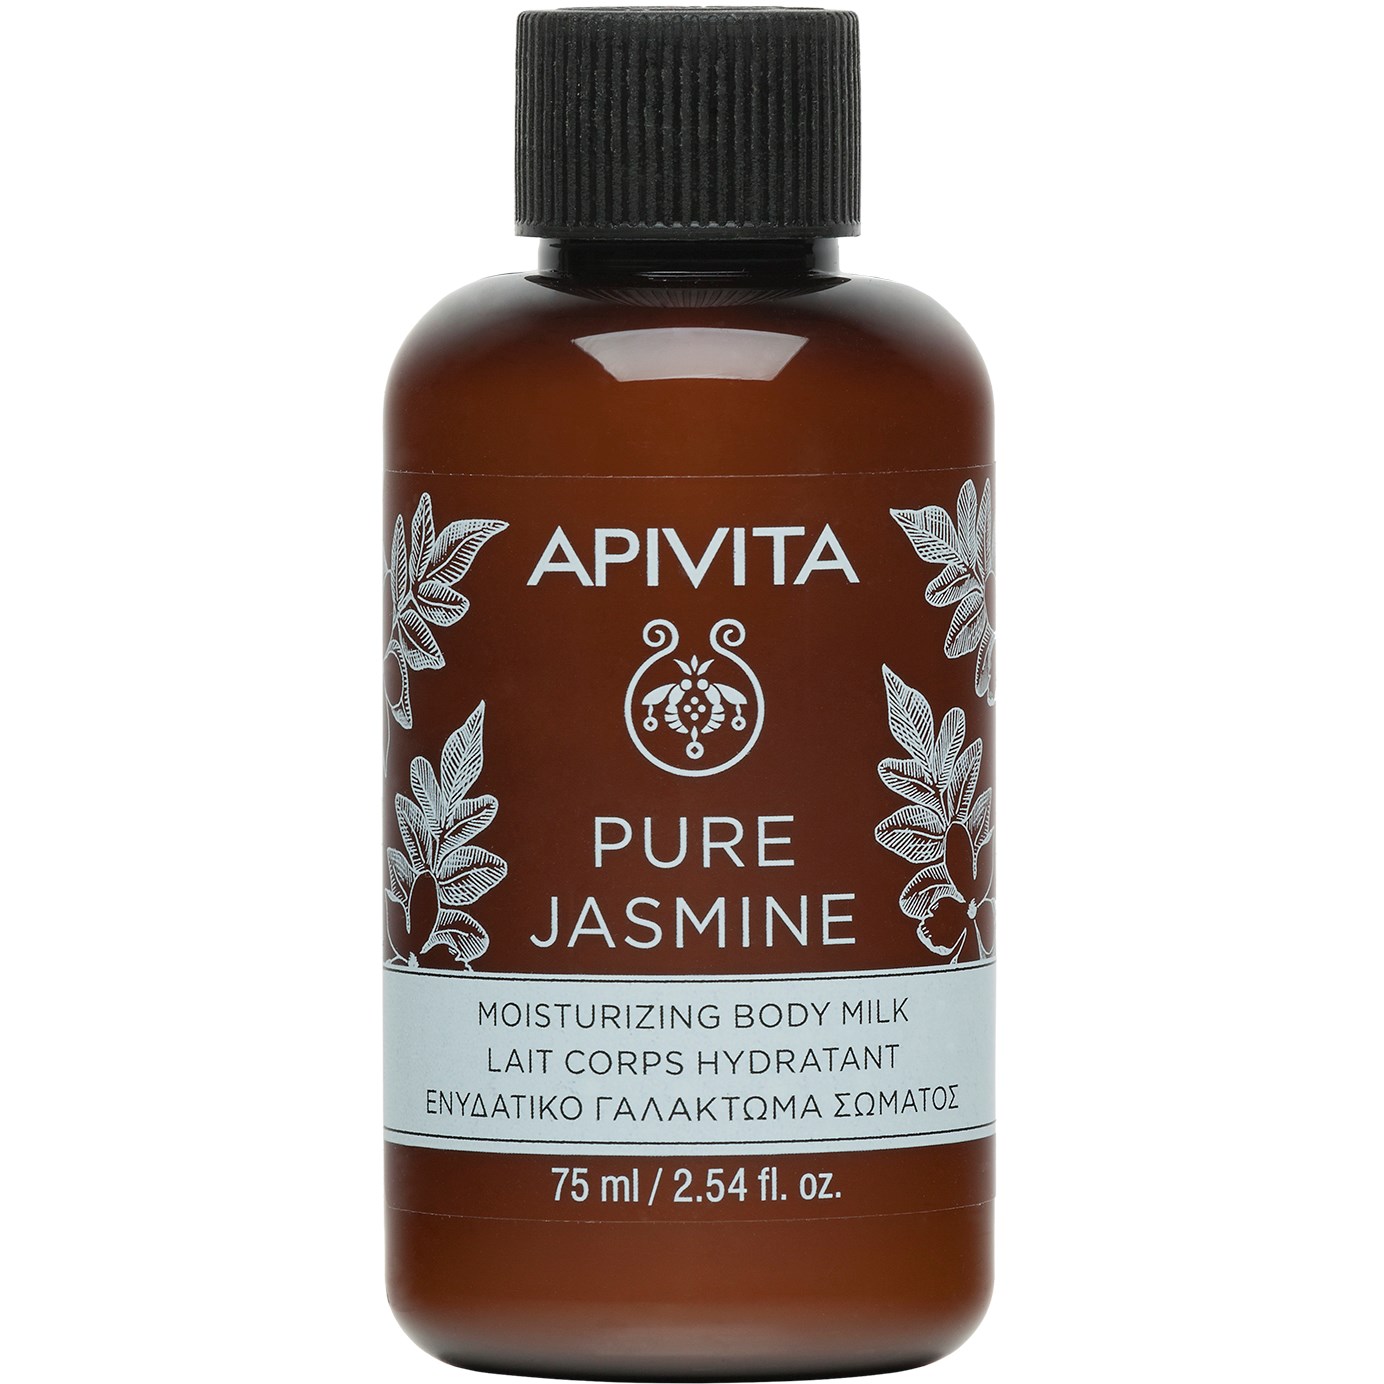 APIVITA Pure Jasmine  Travel Size Moisturizing Body Milk with Jasmine